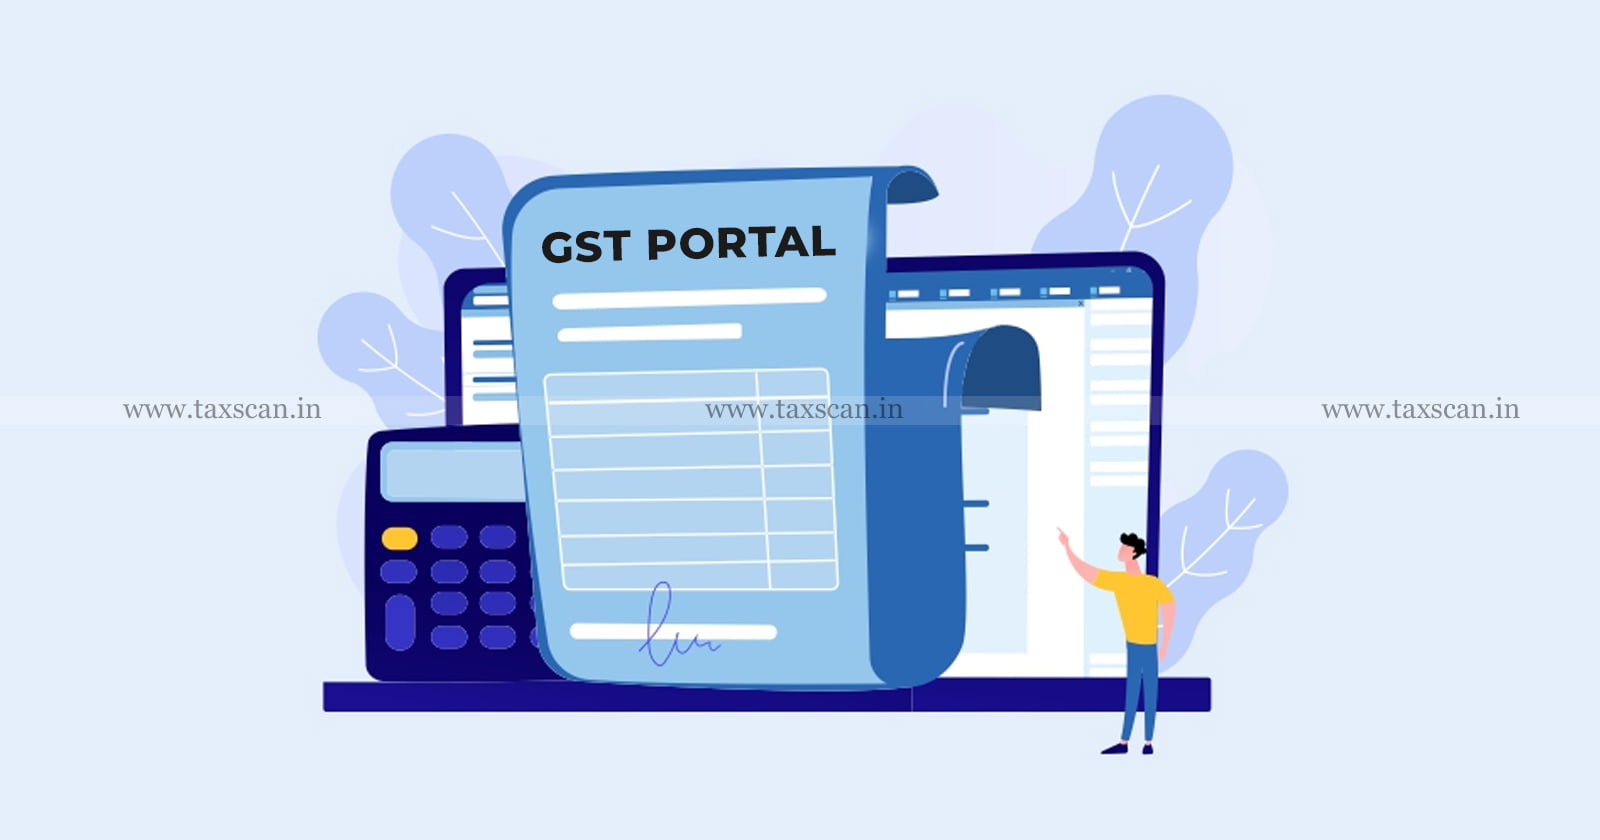 Transitional Credit - Gauhati HC - Assessee - Benefit - gst portal - GST - Re-opening of GST Portal - taxscan